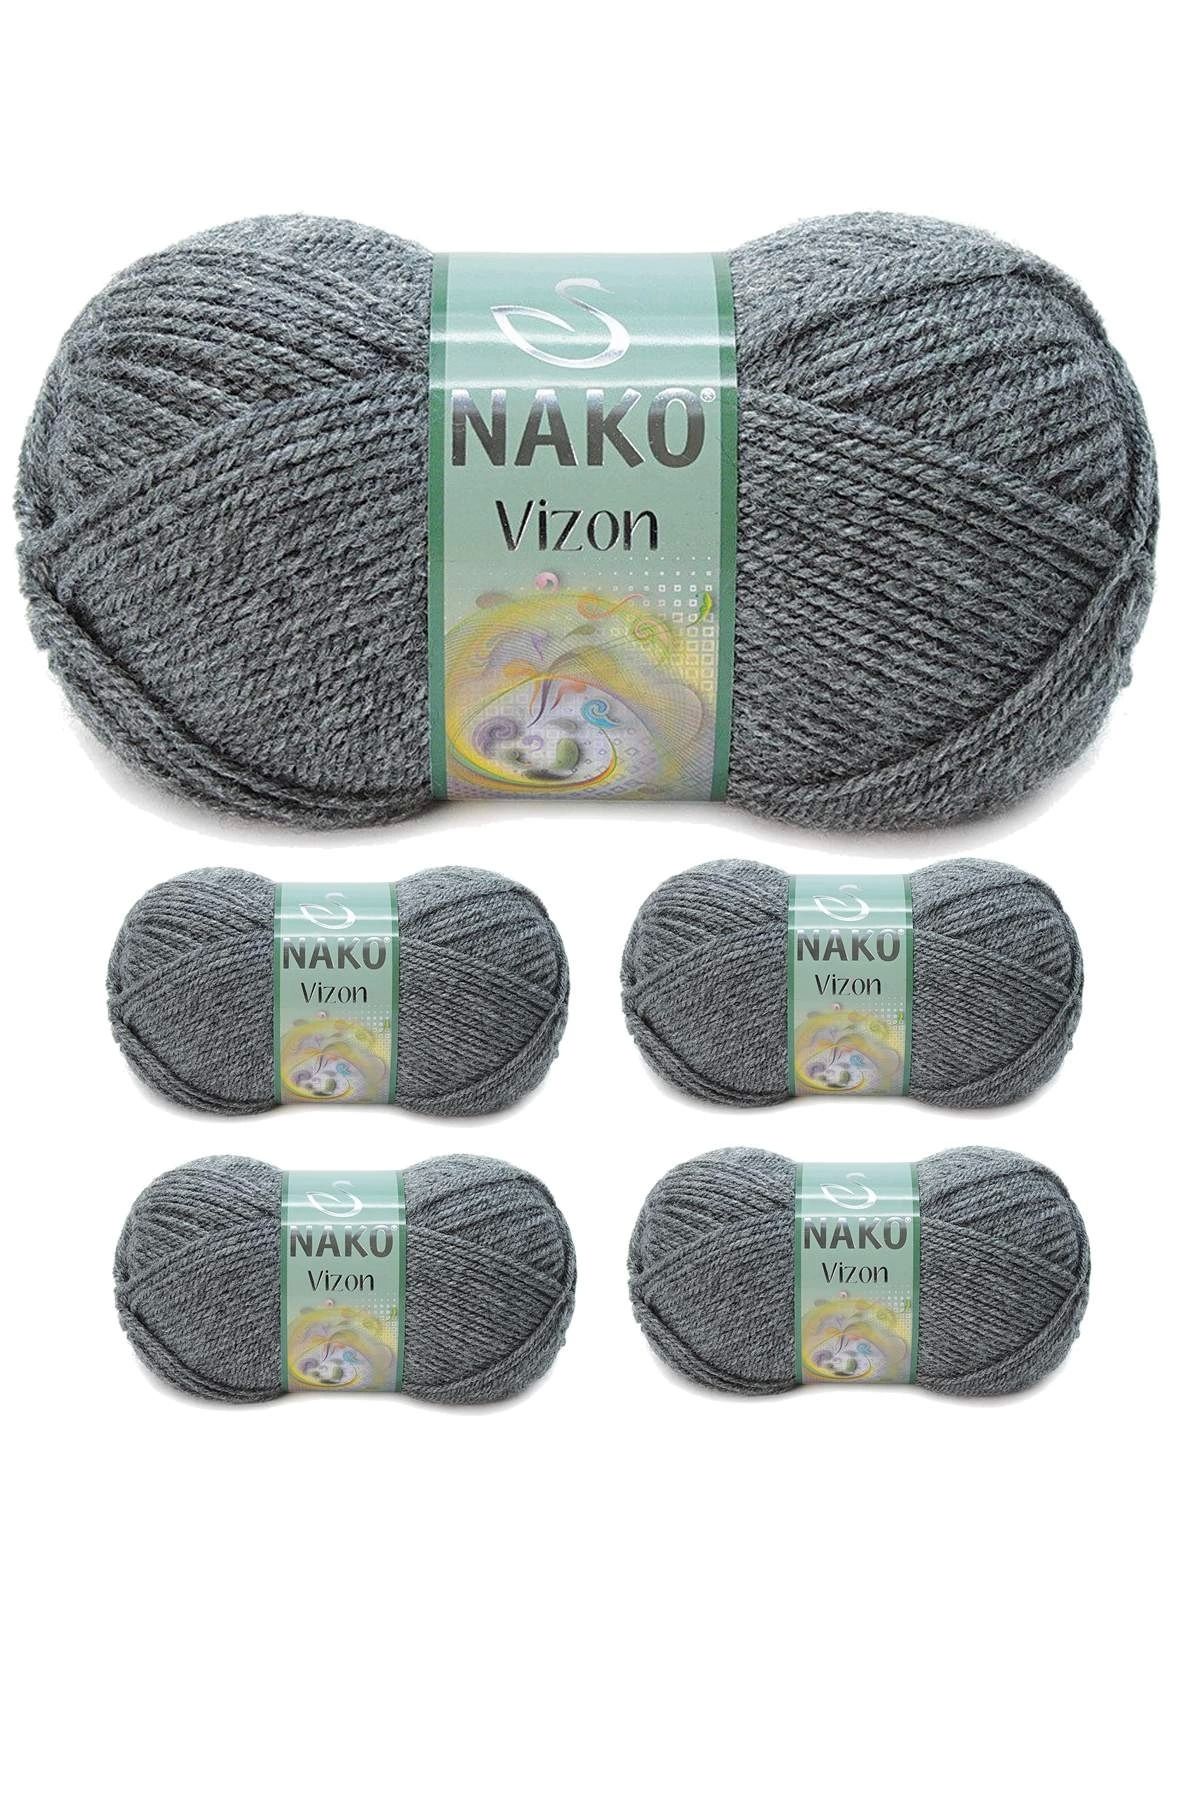 Nako 5 Adet Vizon Premium Akrilik El Örgü Ipi Yünü Renk No:193 Loş Gri